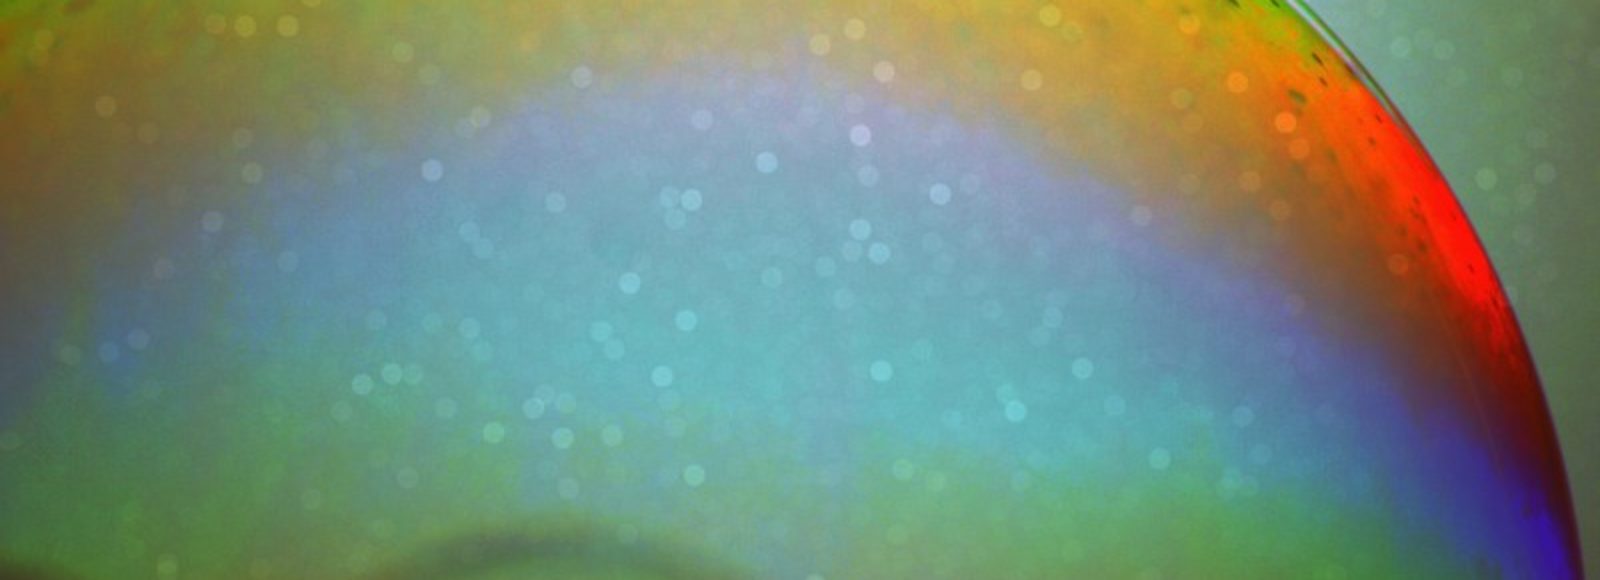 Image: rainbow inside a bubble